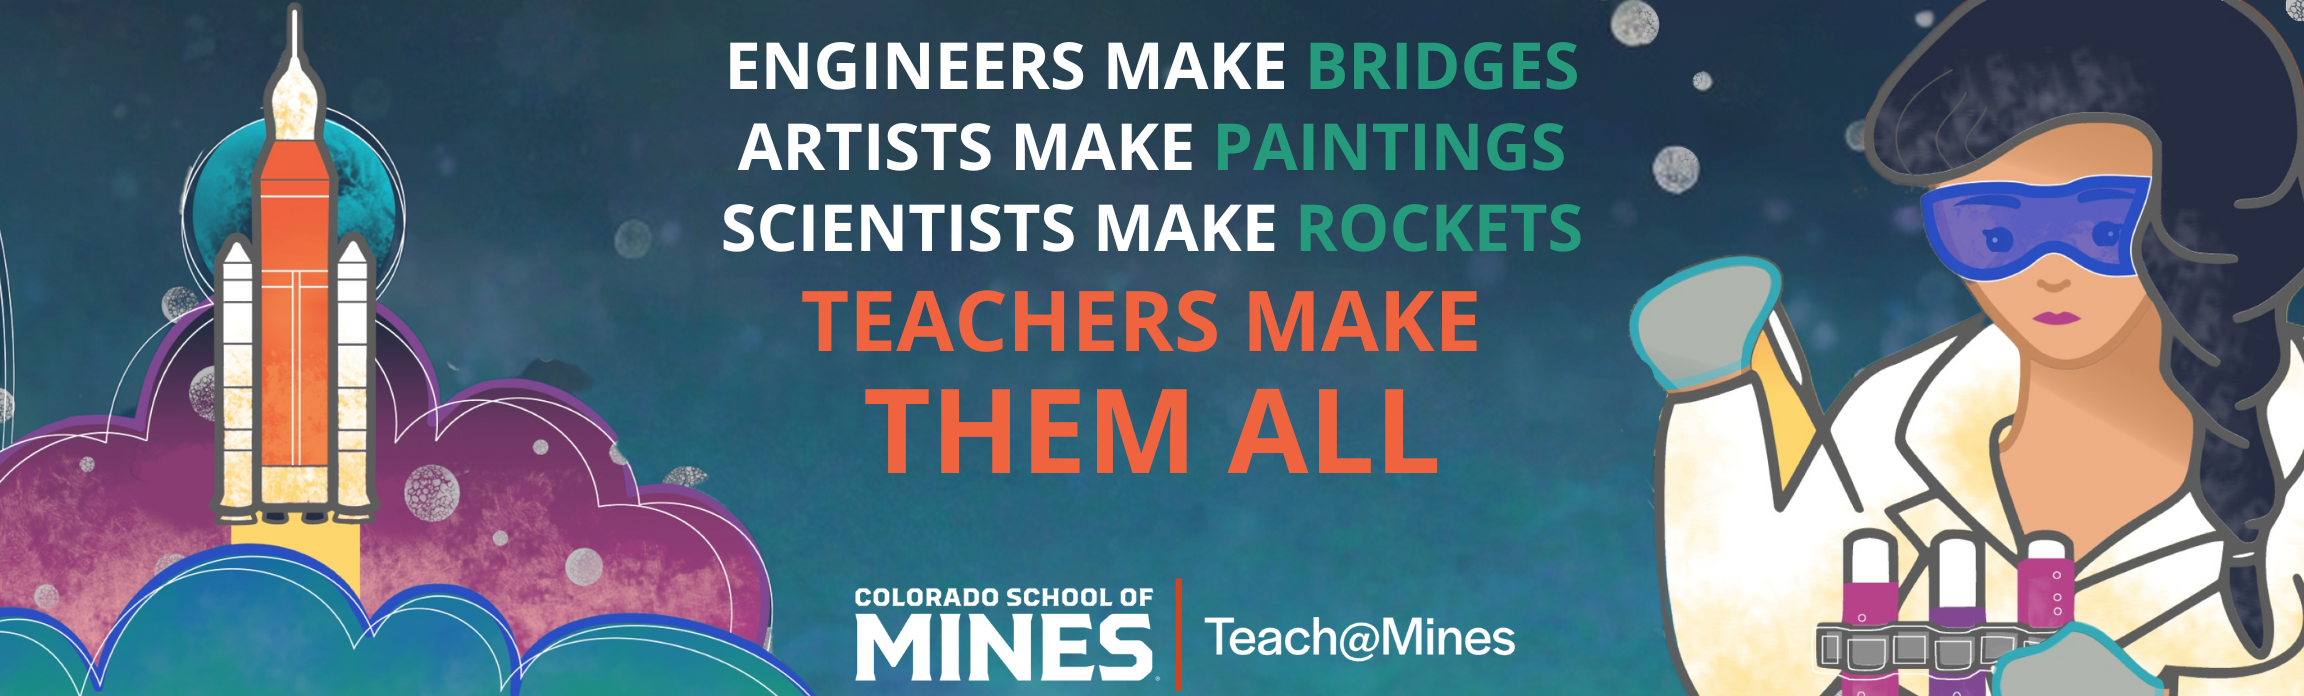 Banner with poem: "Engineering make bridges, Artists make paintings, Scientists make rockets, Teachers make them all"